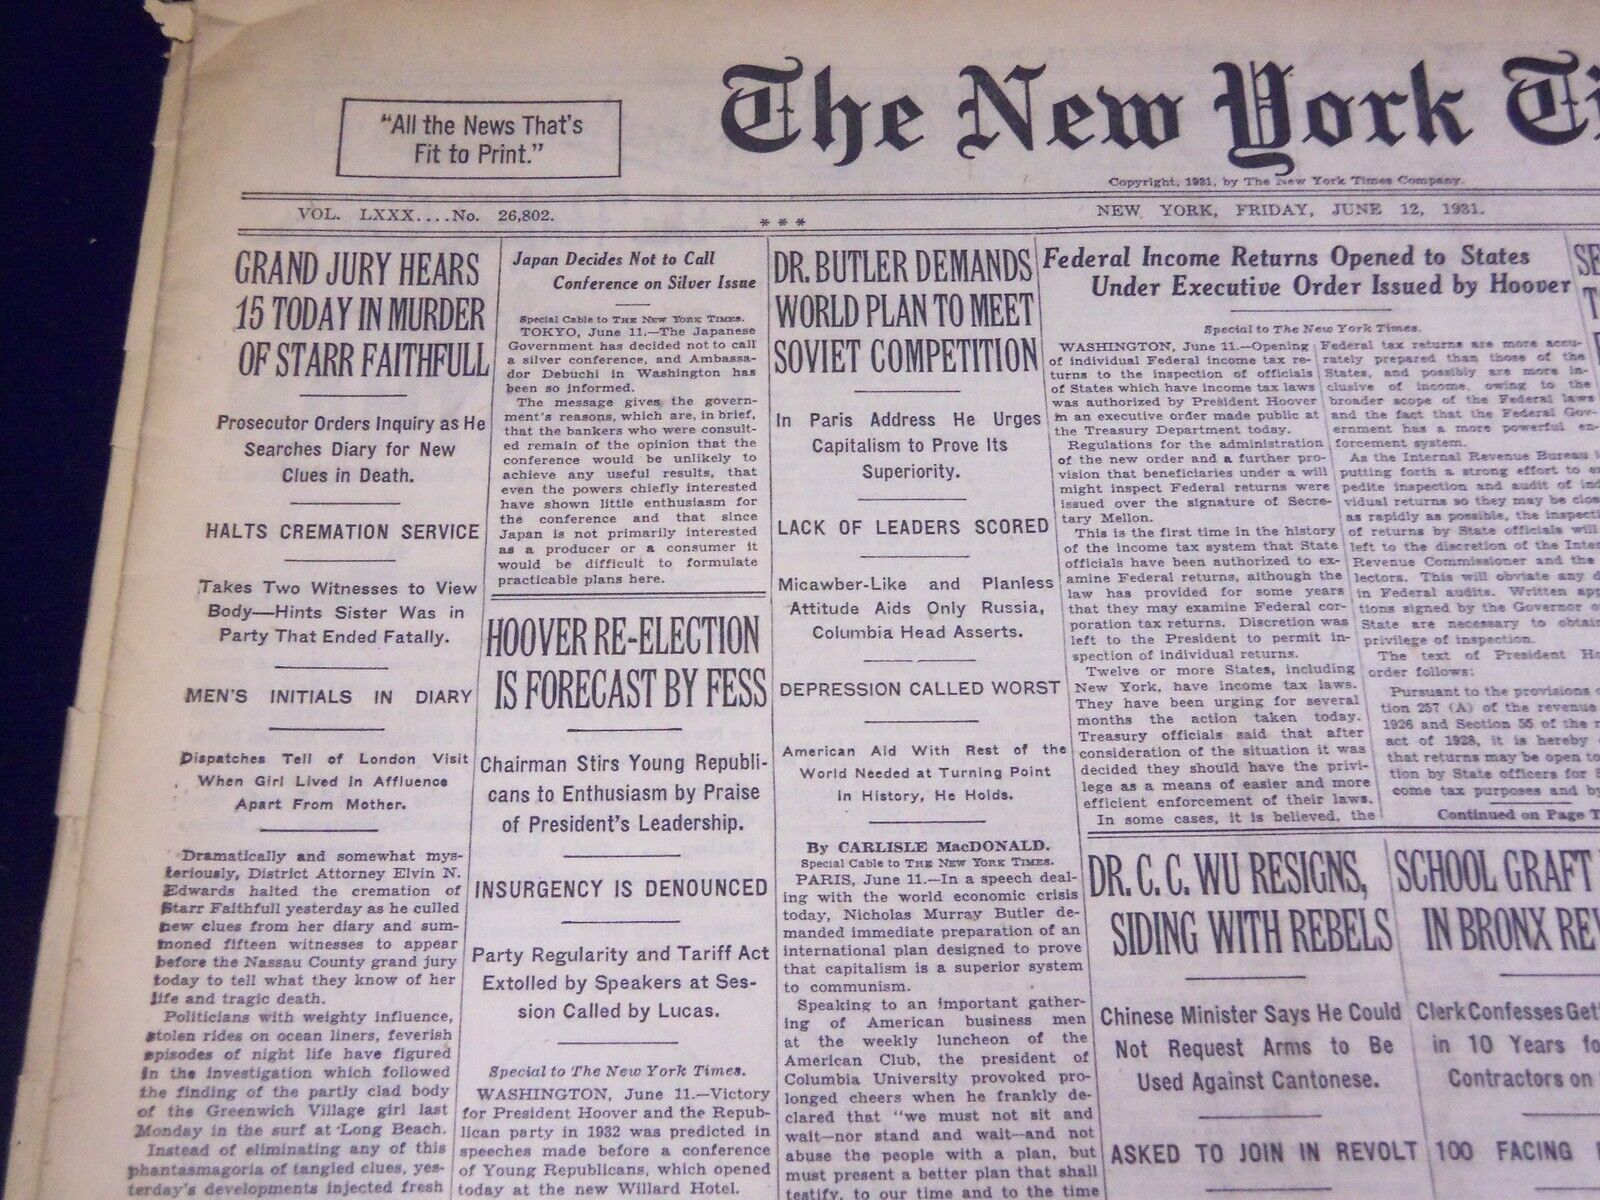 1931 JUNE 12 NEW YORK TIMES - STARR FAITHFULL CREMATION HALTED - NT 2212